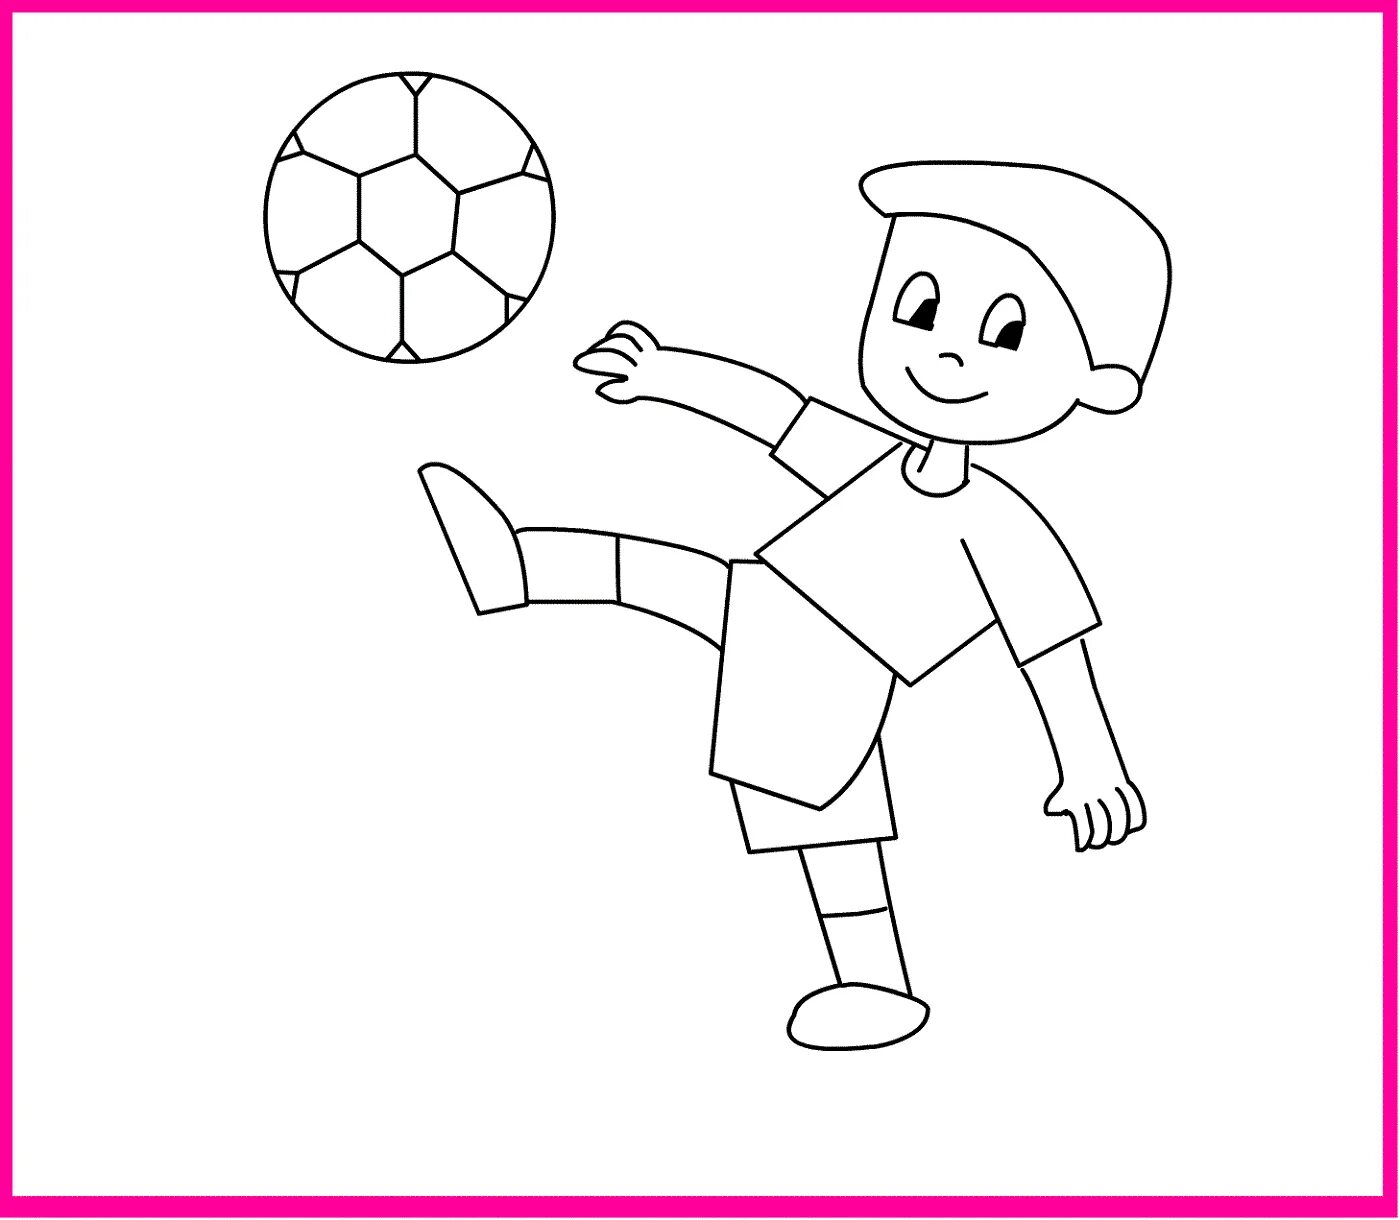 Рисунок на тему футбол. Рисунки на футбольную тему для детей. Футбол рисунок для детей. Футбол рисунок для детей лёгкий.